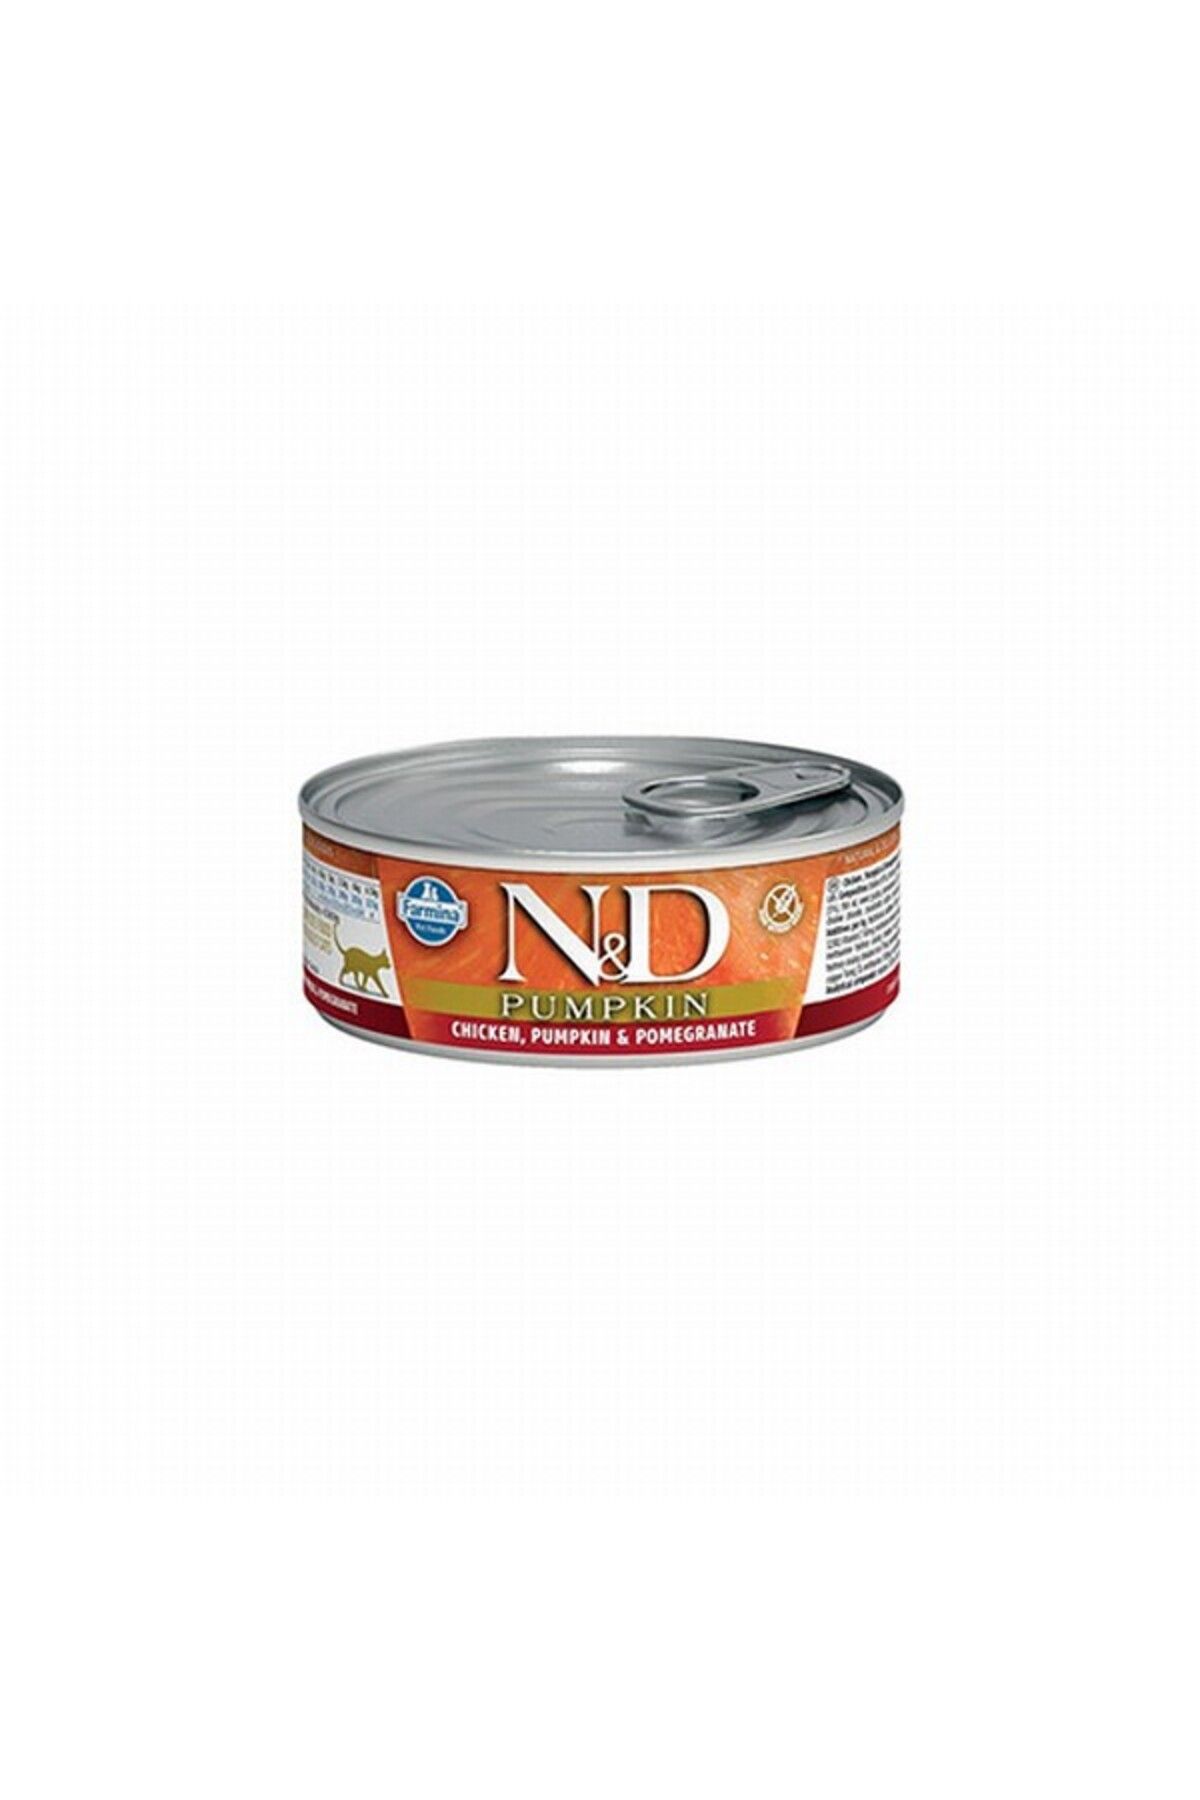 N & D Pumpkin Balkabaklı Tavuklu Narlı Yetişkin Kedi Konservesi 80 gr